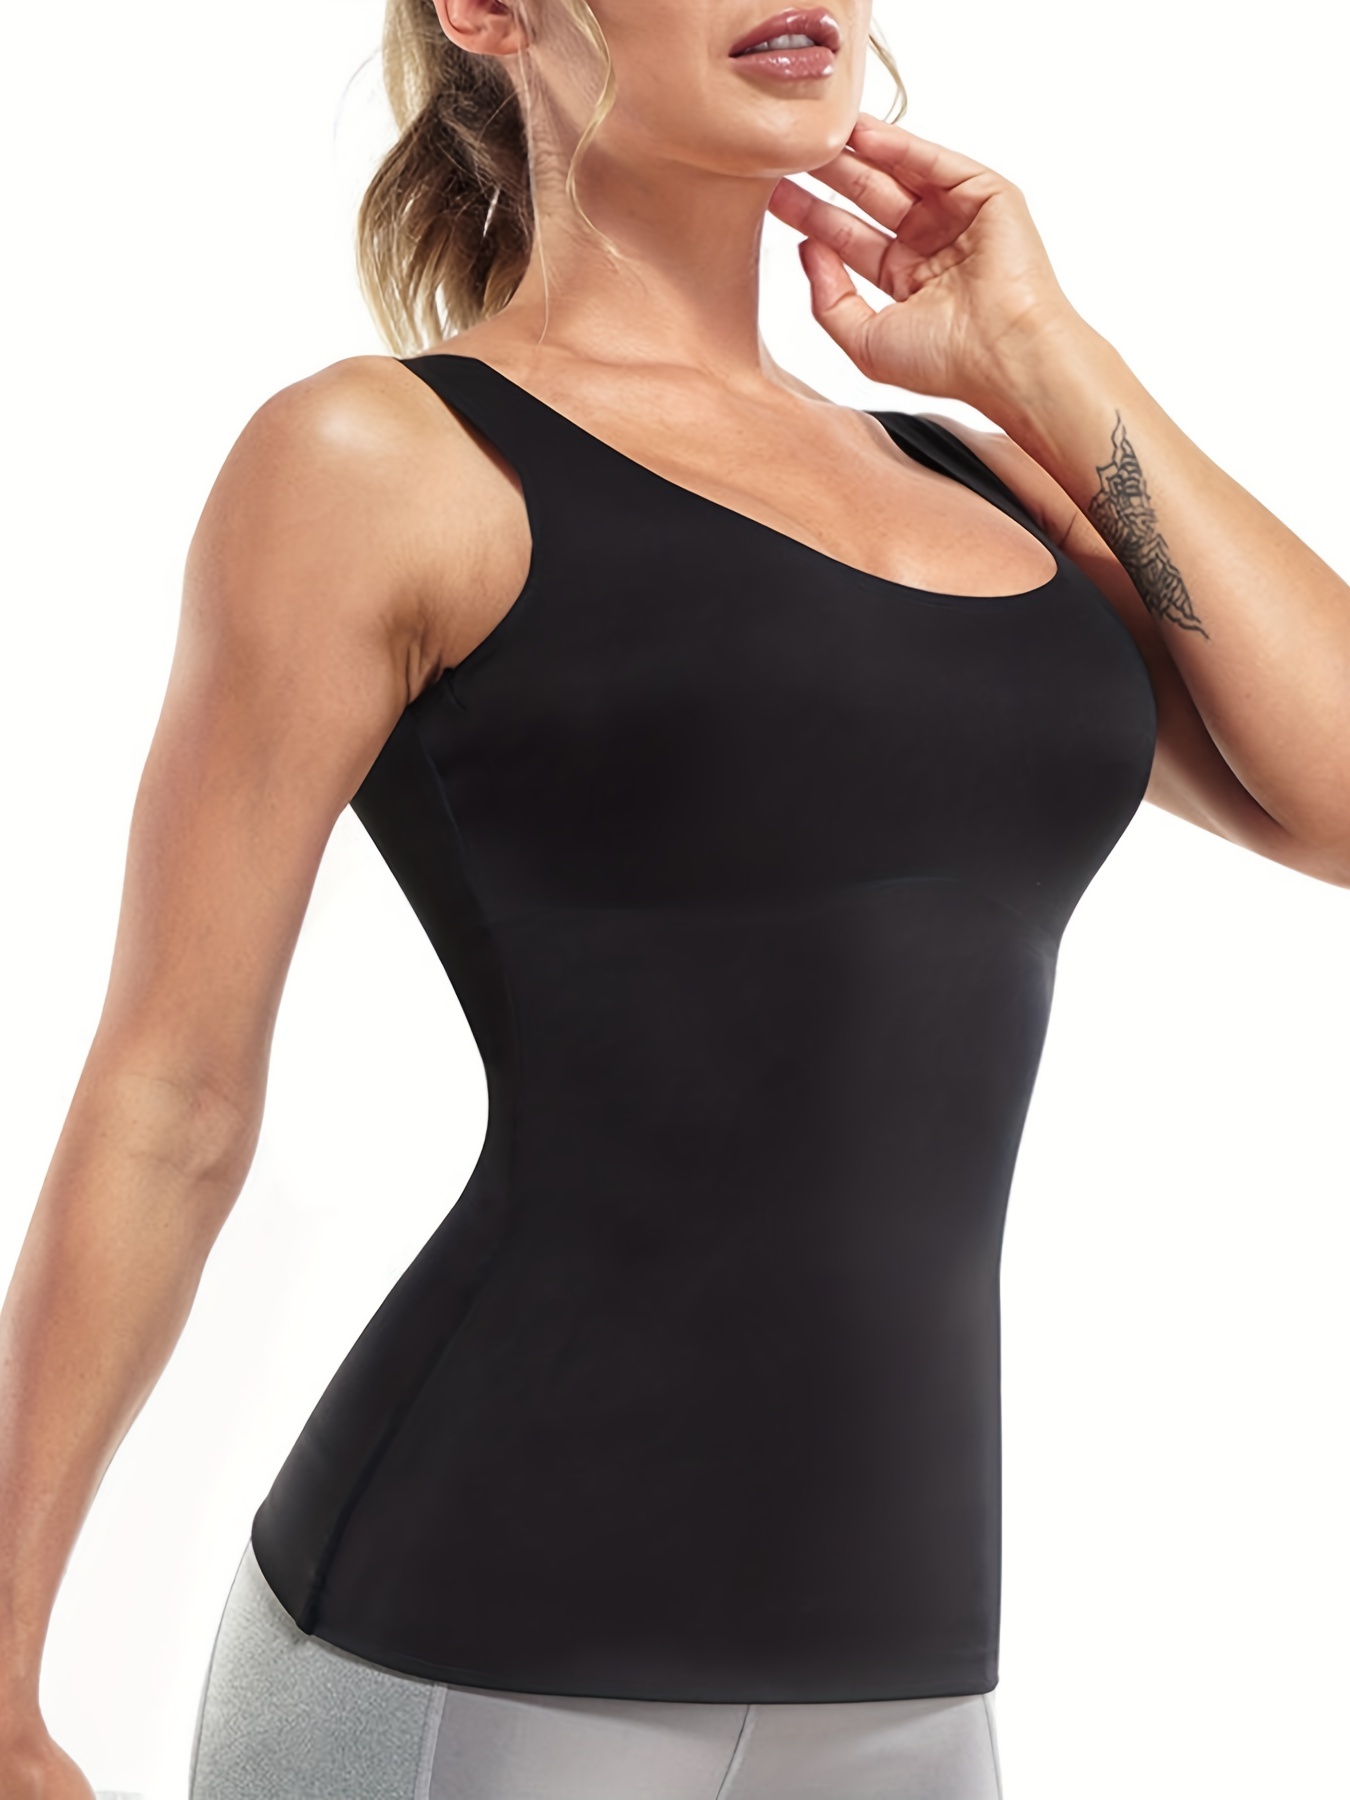 Gotoly Women Waist Trainer Shapewear Vest Seamless Body Shaper Tummy  Control Workout Tank Top Corset(Black Small) 